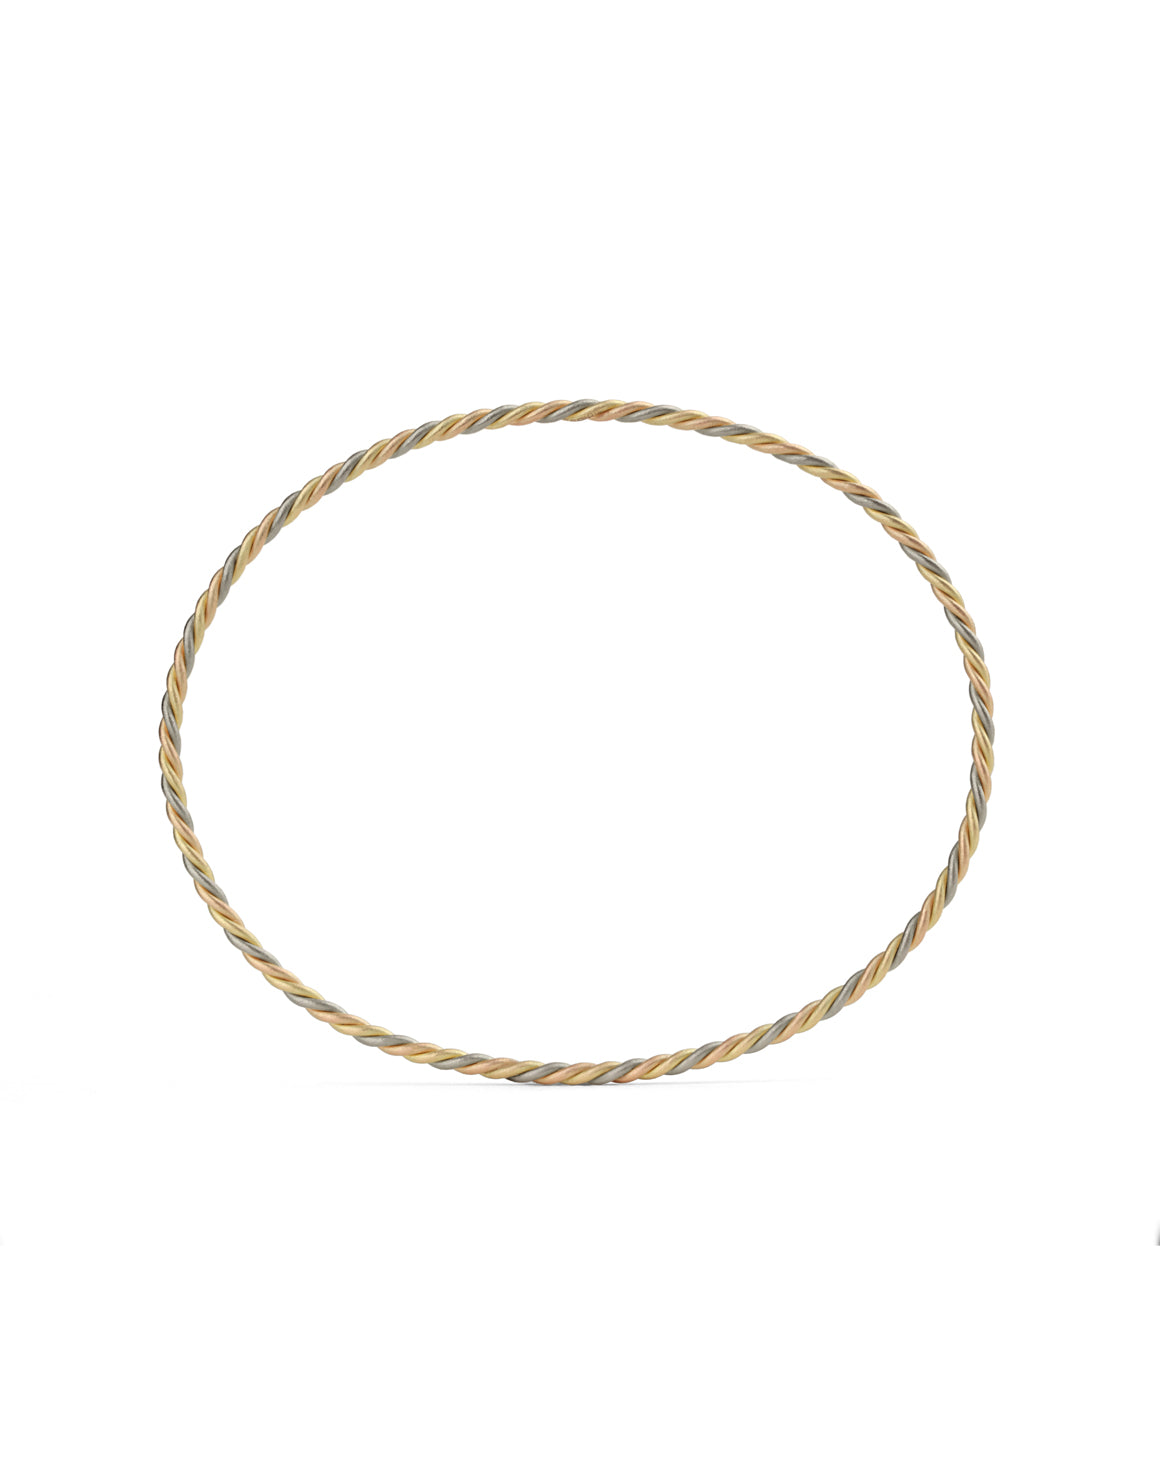 Three Strand Rope Bangle - Multi Gold - Extra Fine